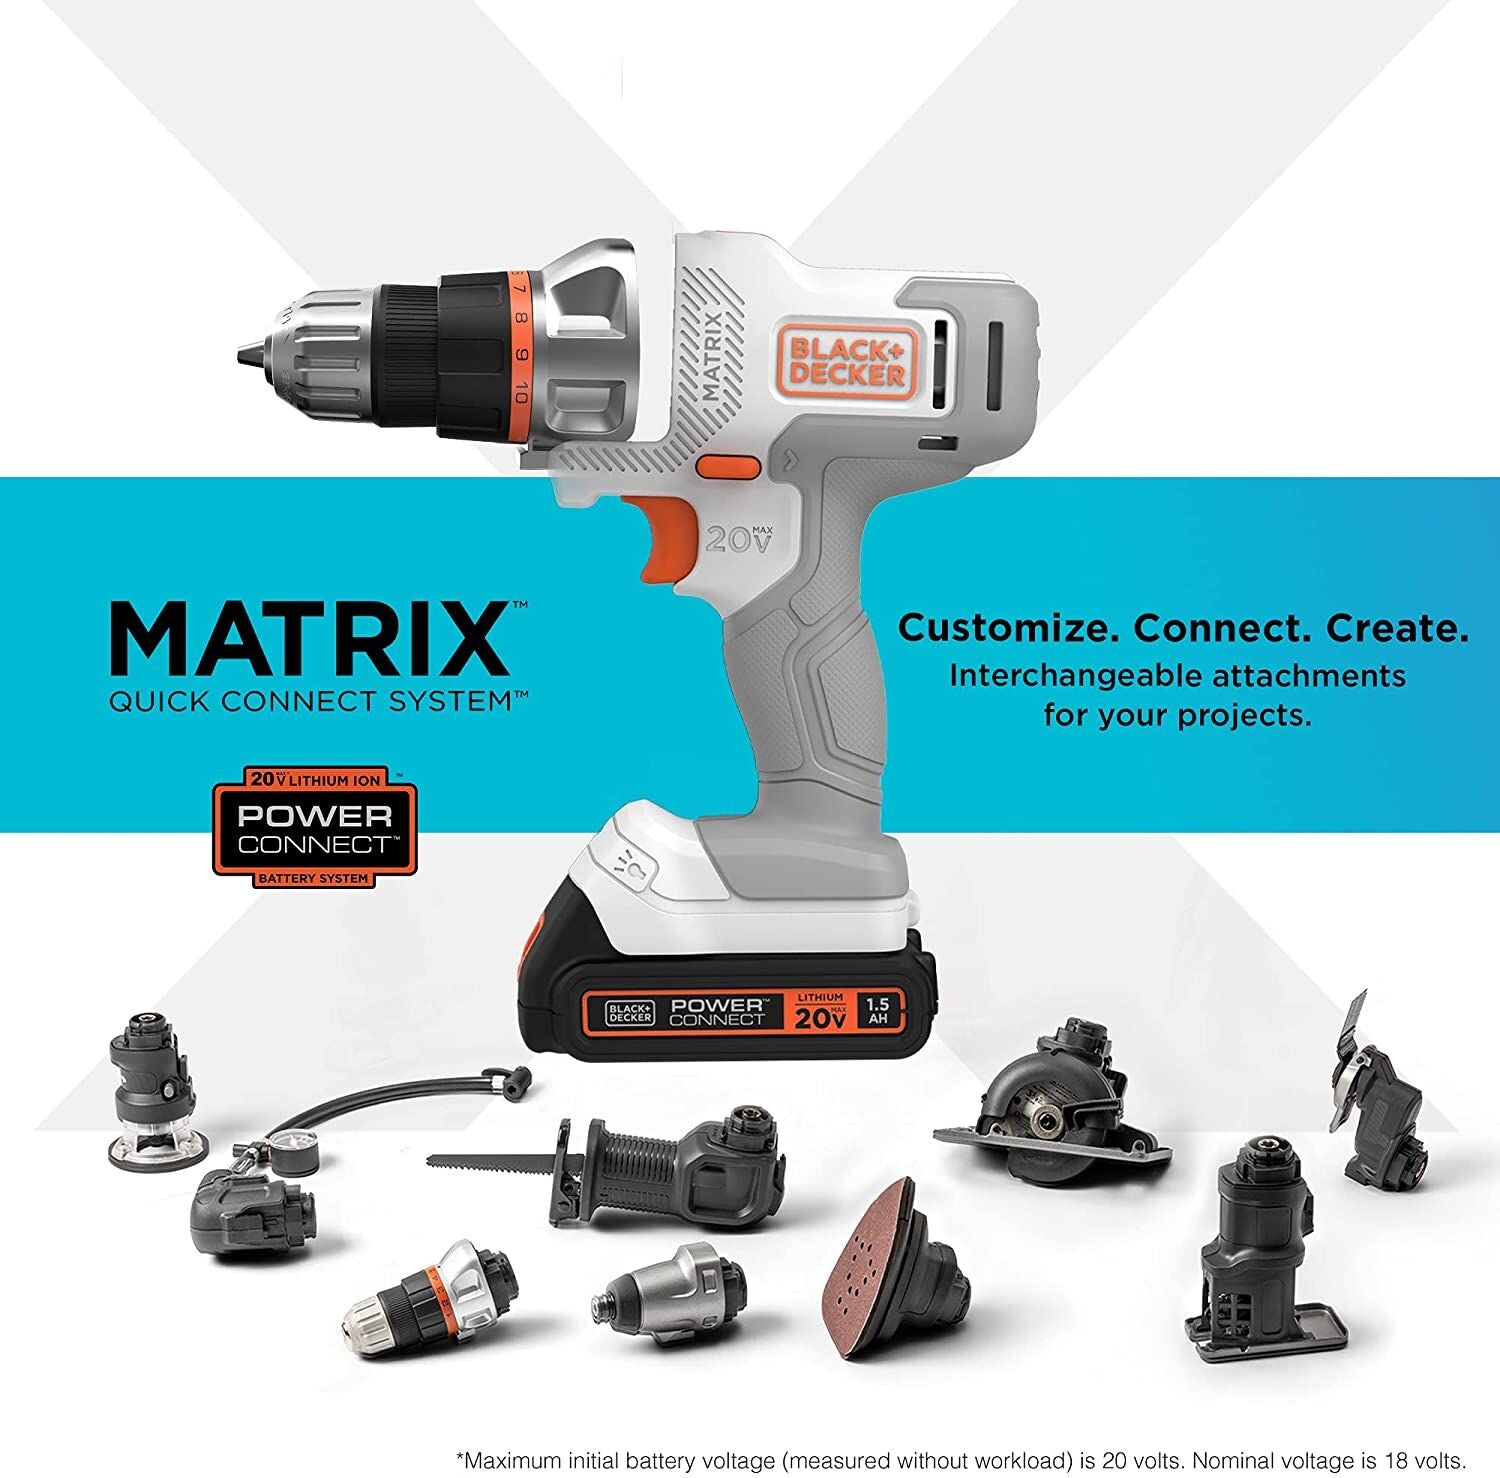 BLACK+DECKER 20V MAX MATRIX Cordless Drill/Driver Kit, White and Orange  with Screwdriver Bit Set, 42-Piece (BDCDMT120WC1FF & BDA42SD)